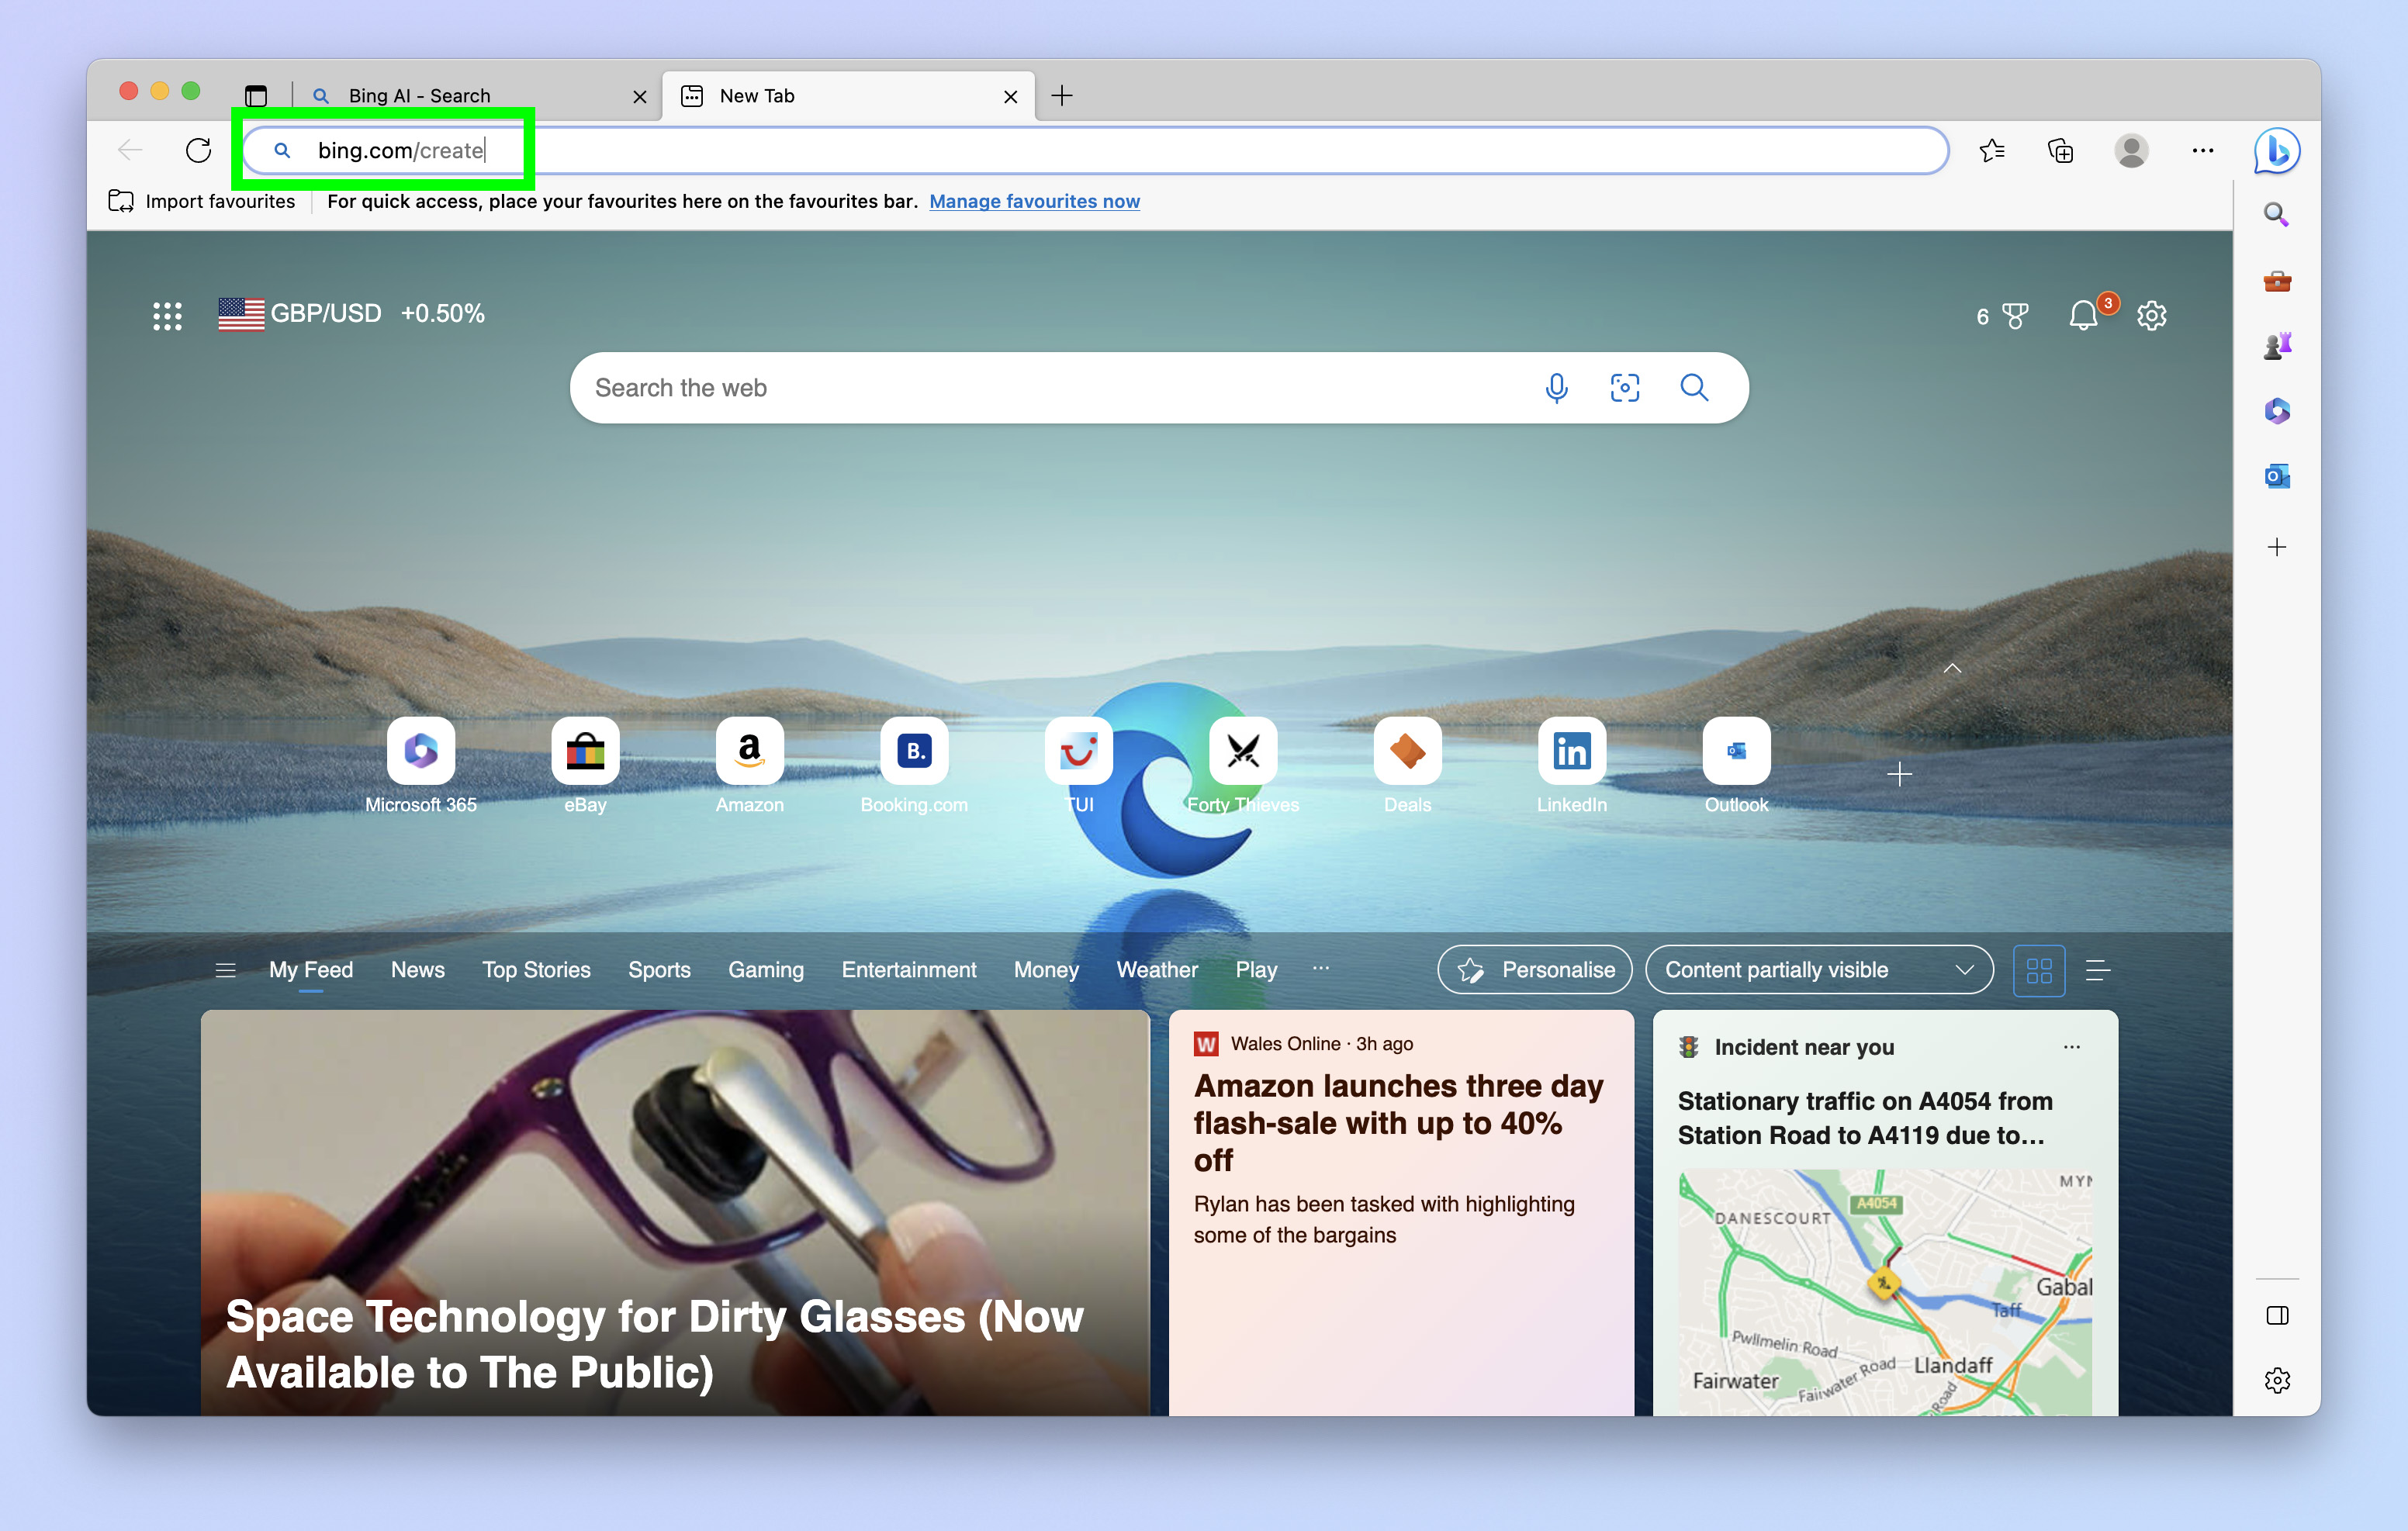 Screenshot showing how to use Bing Image Creator